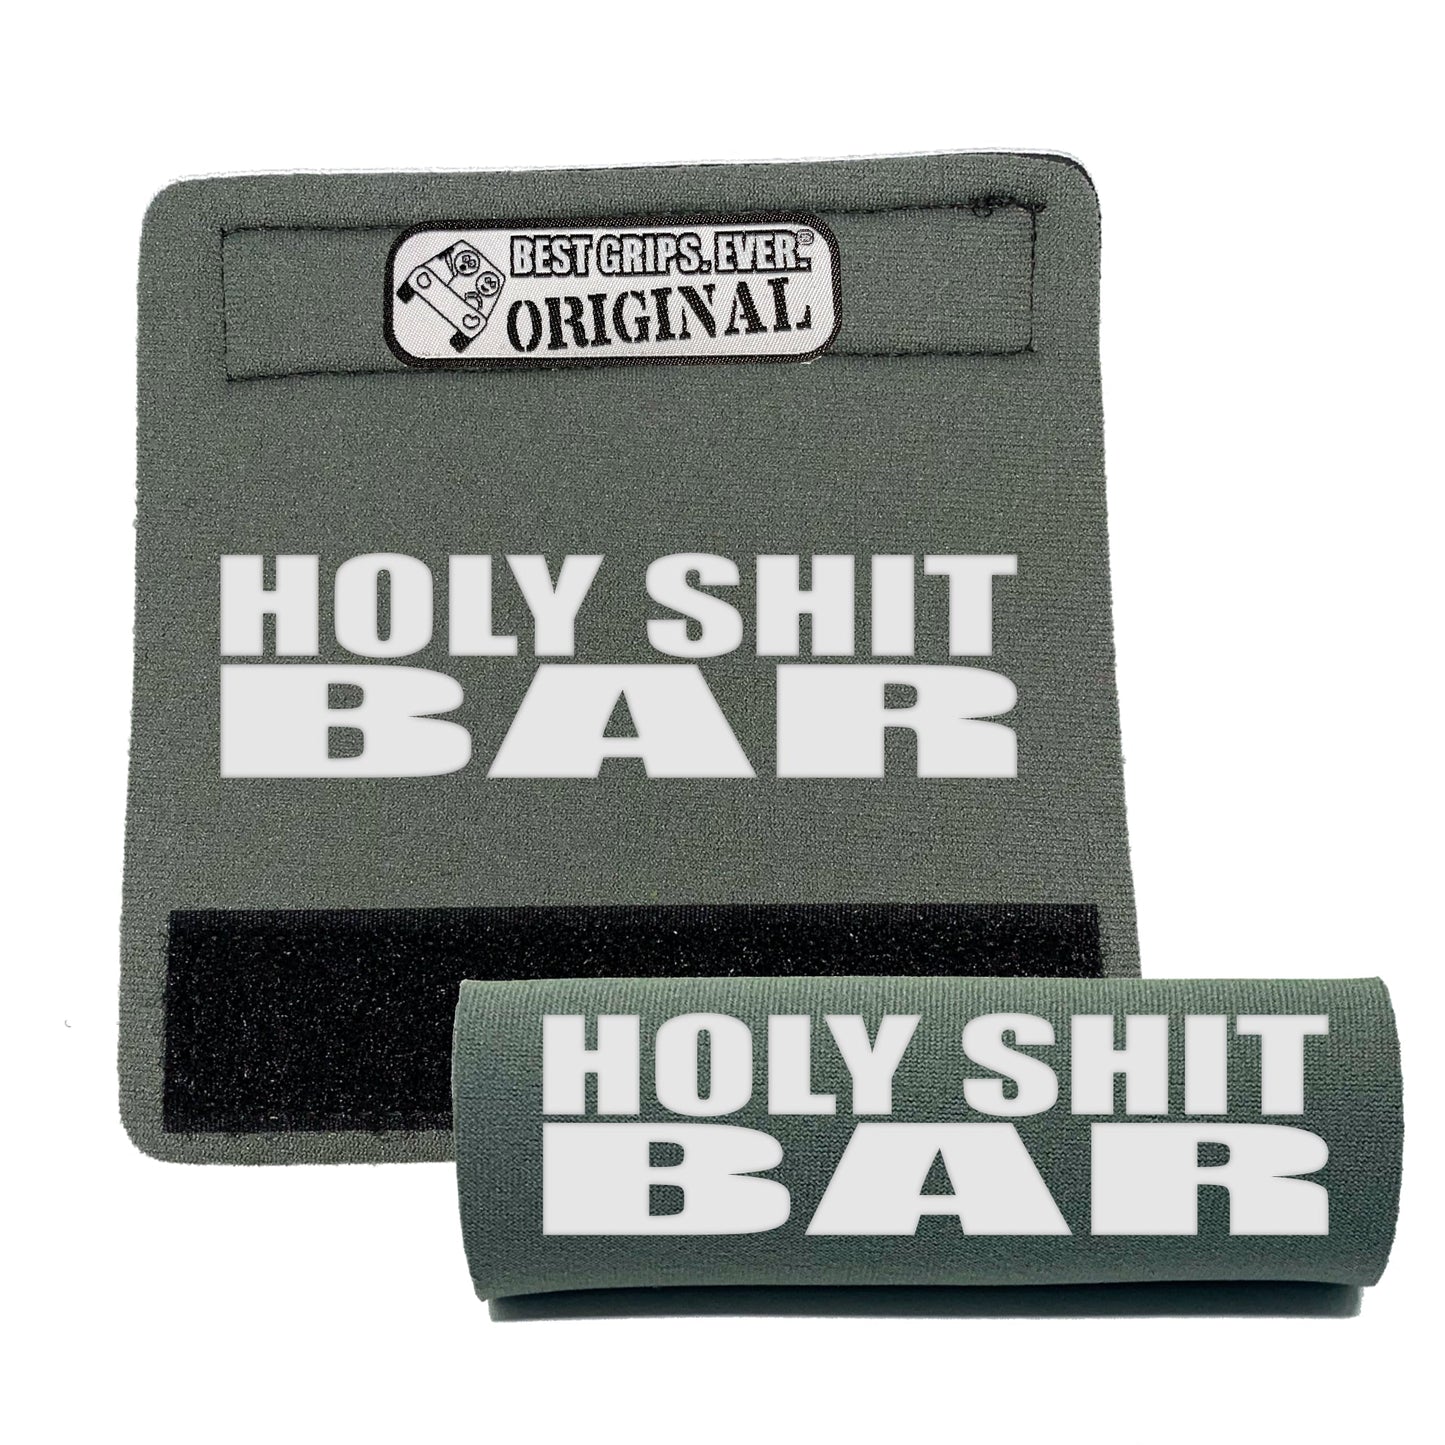 The Holy Shit Bar® (1 Unit)